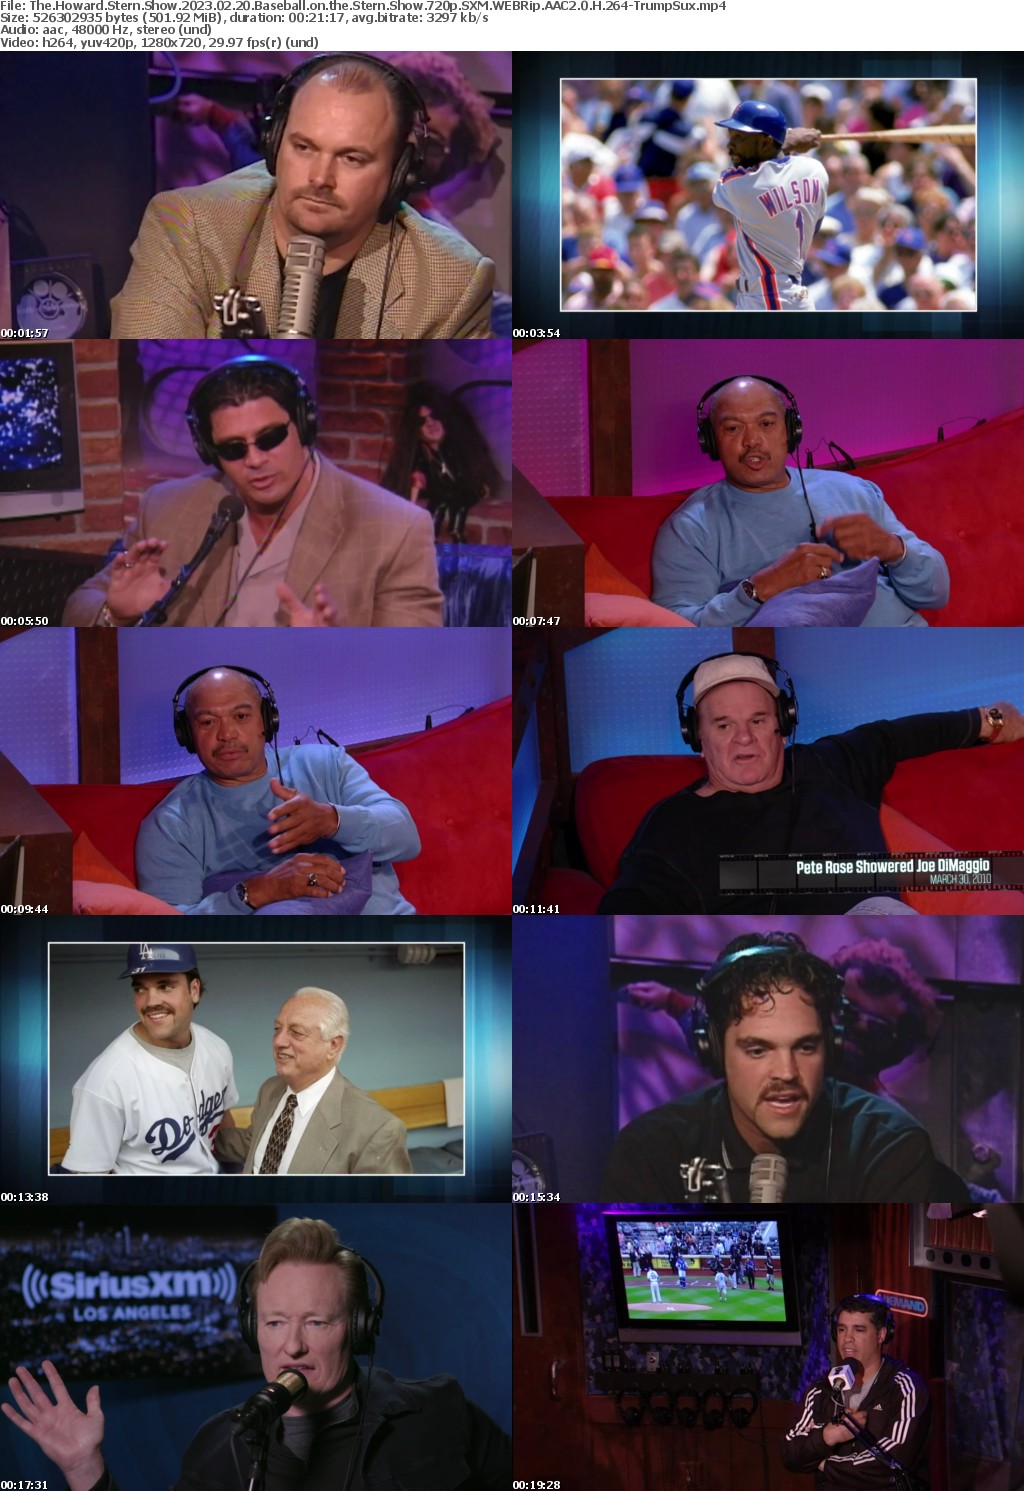 Howard Stern Show 2023 02 20 Baseball on the Stern Show 720p Dbaum2